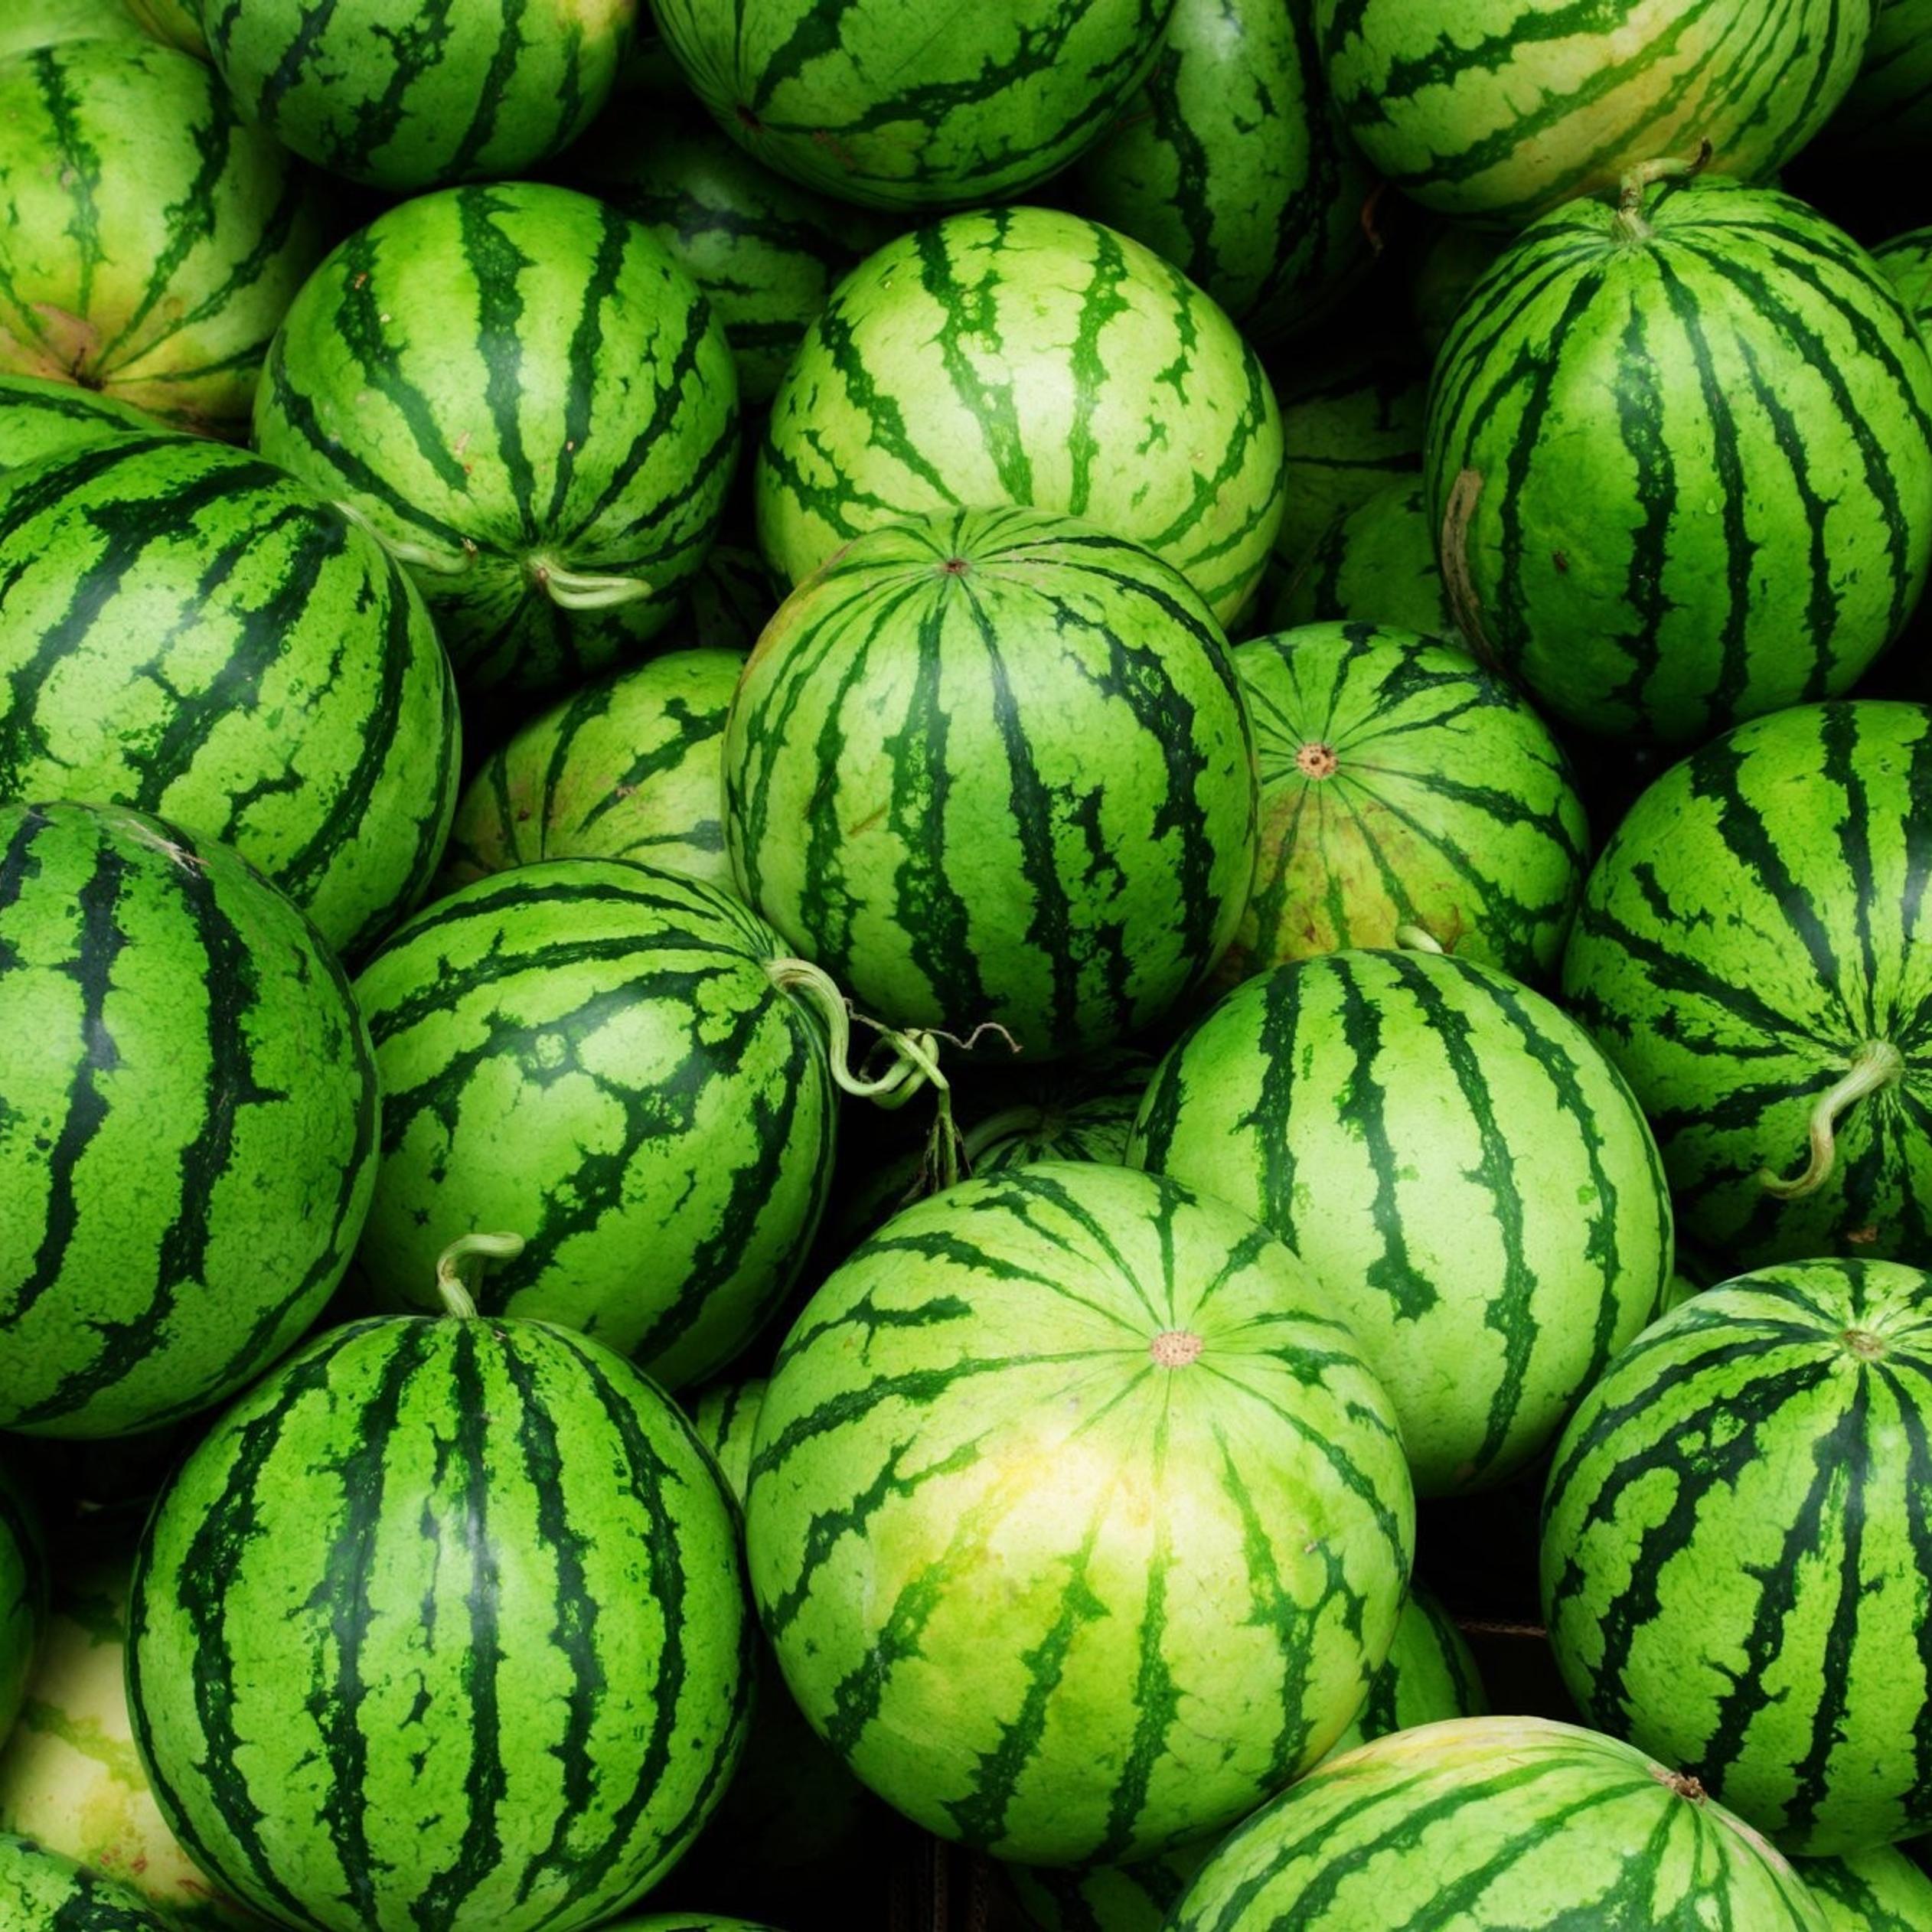 Green wallpaper of watermelons